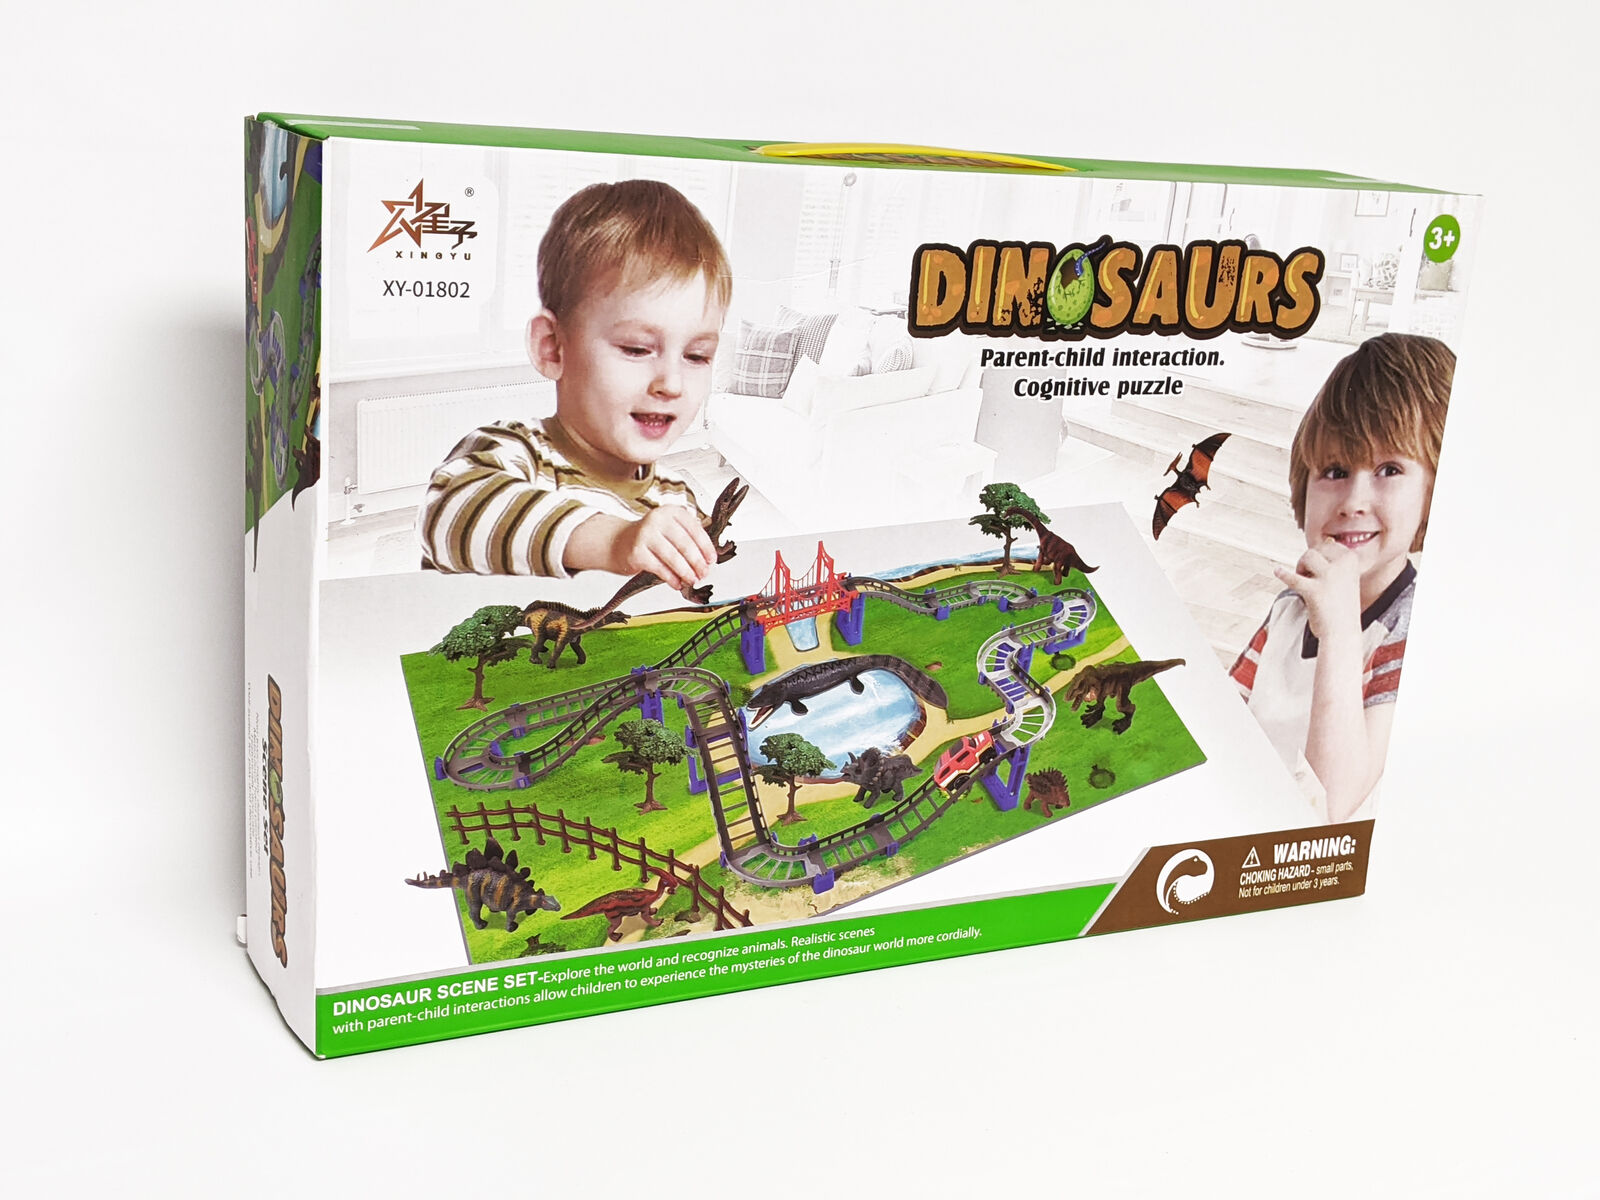 Dinosaurs Puzzle Set Toy for Kids, Improve Cognitive Function, Prehistoric